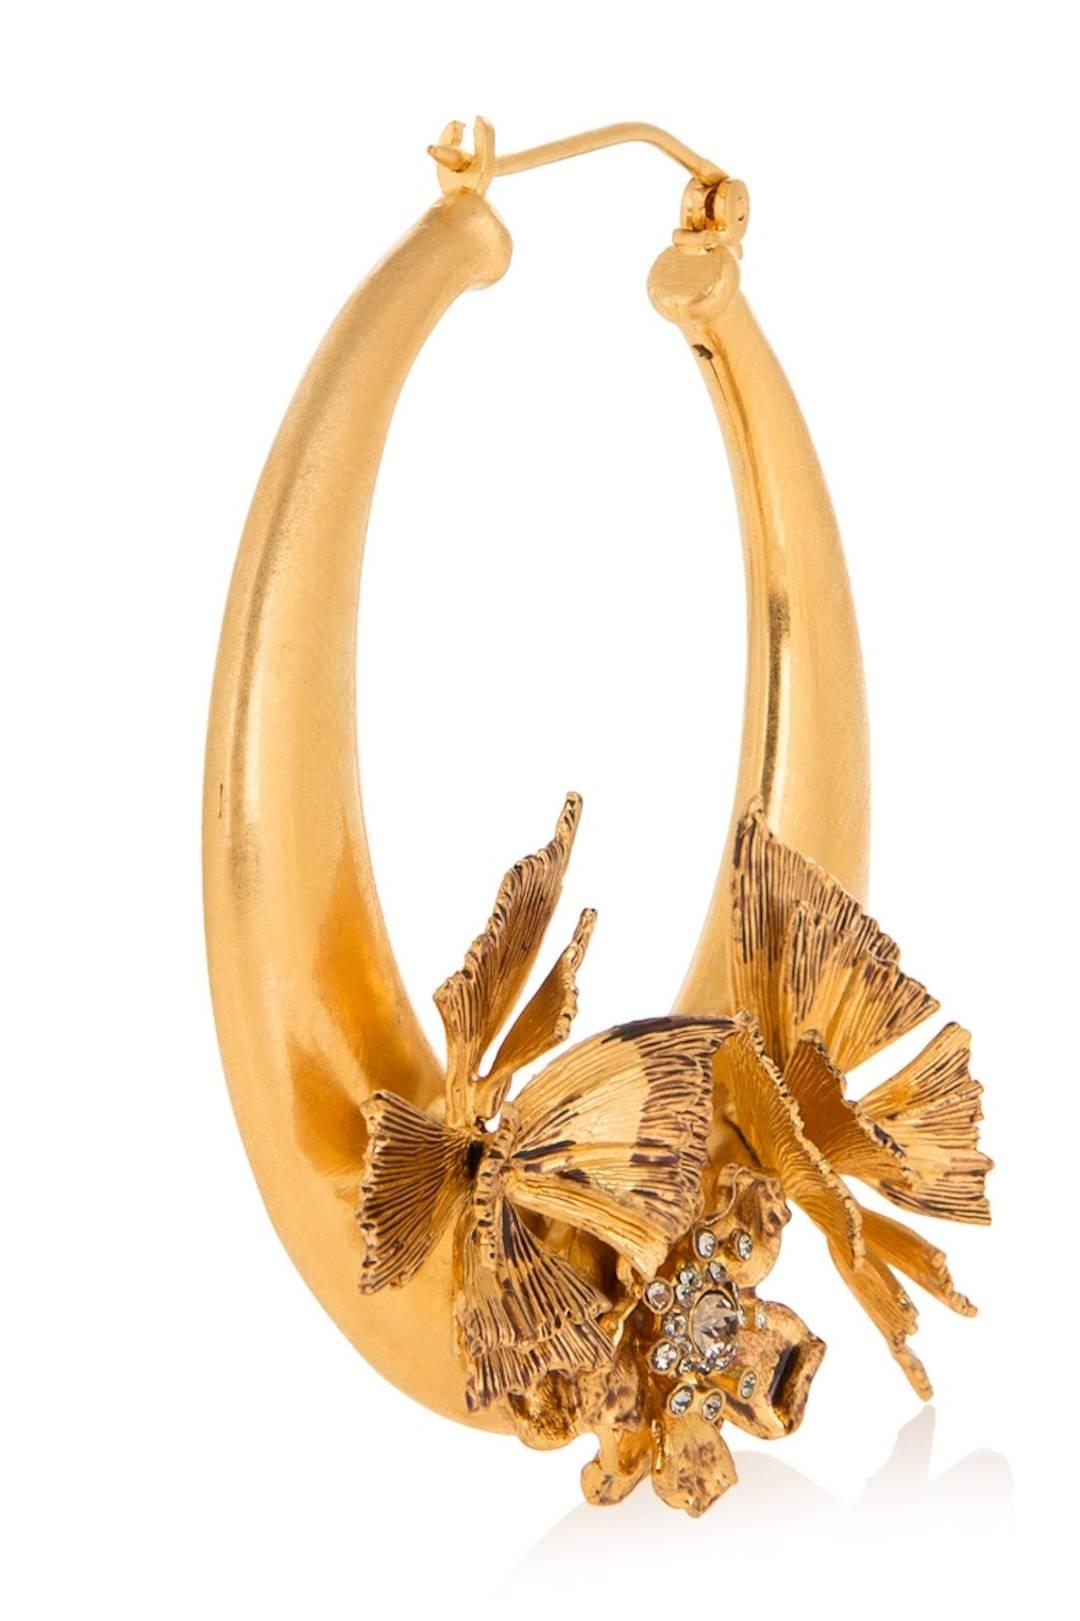 Women's Alexander McQueen NEW Gold Swarovski Crystal Hoop Earrings in Box